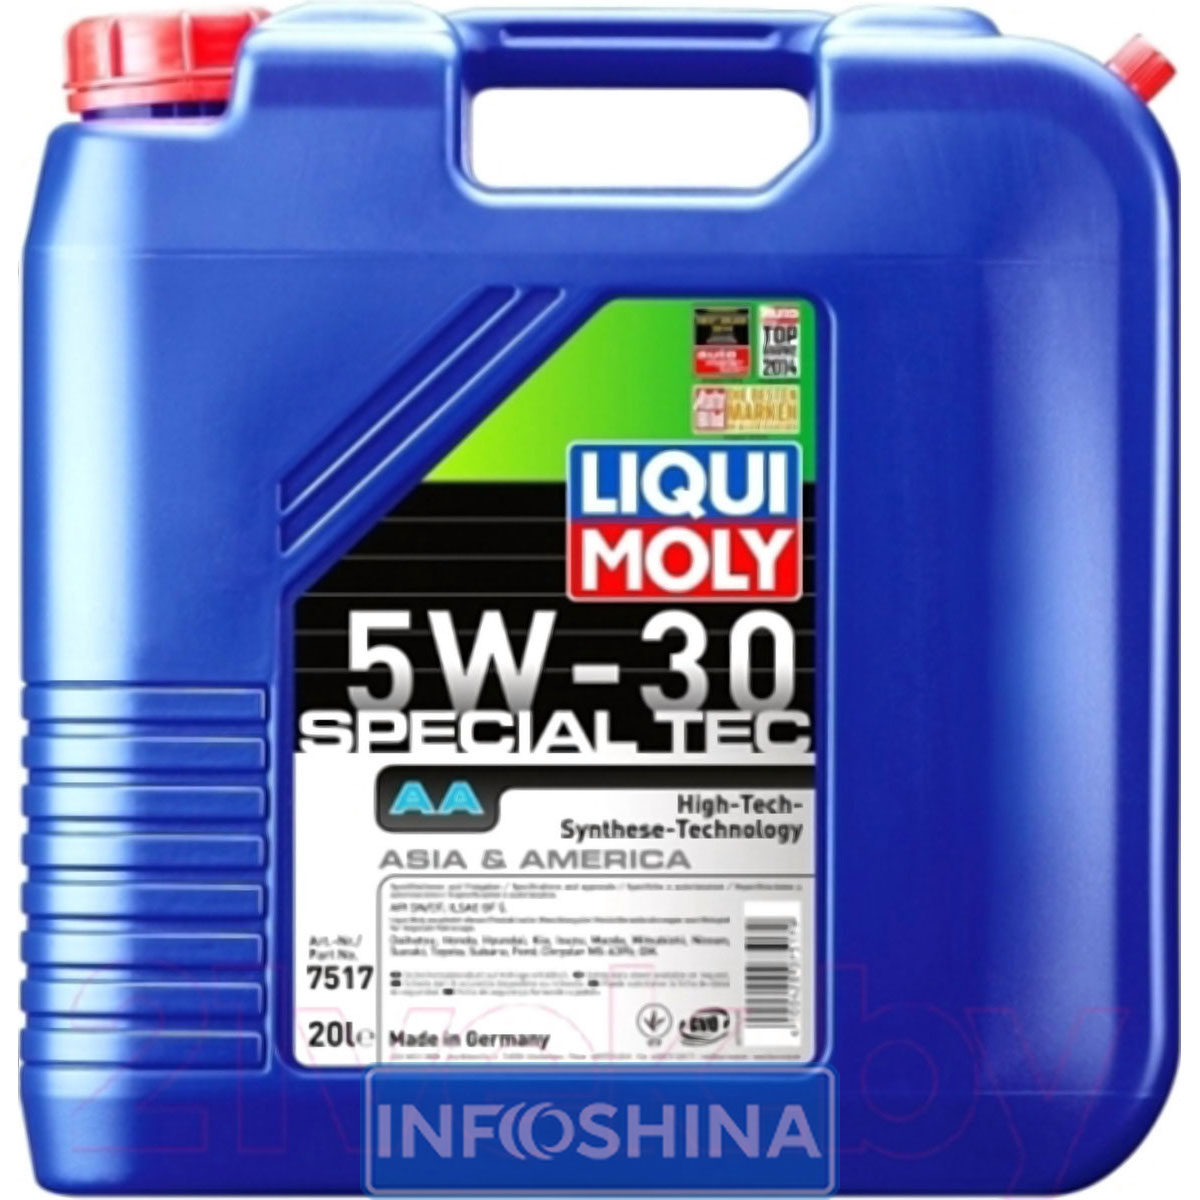 Купить масло Liqui Moly Special Tec AA 5W-30 (20л)